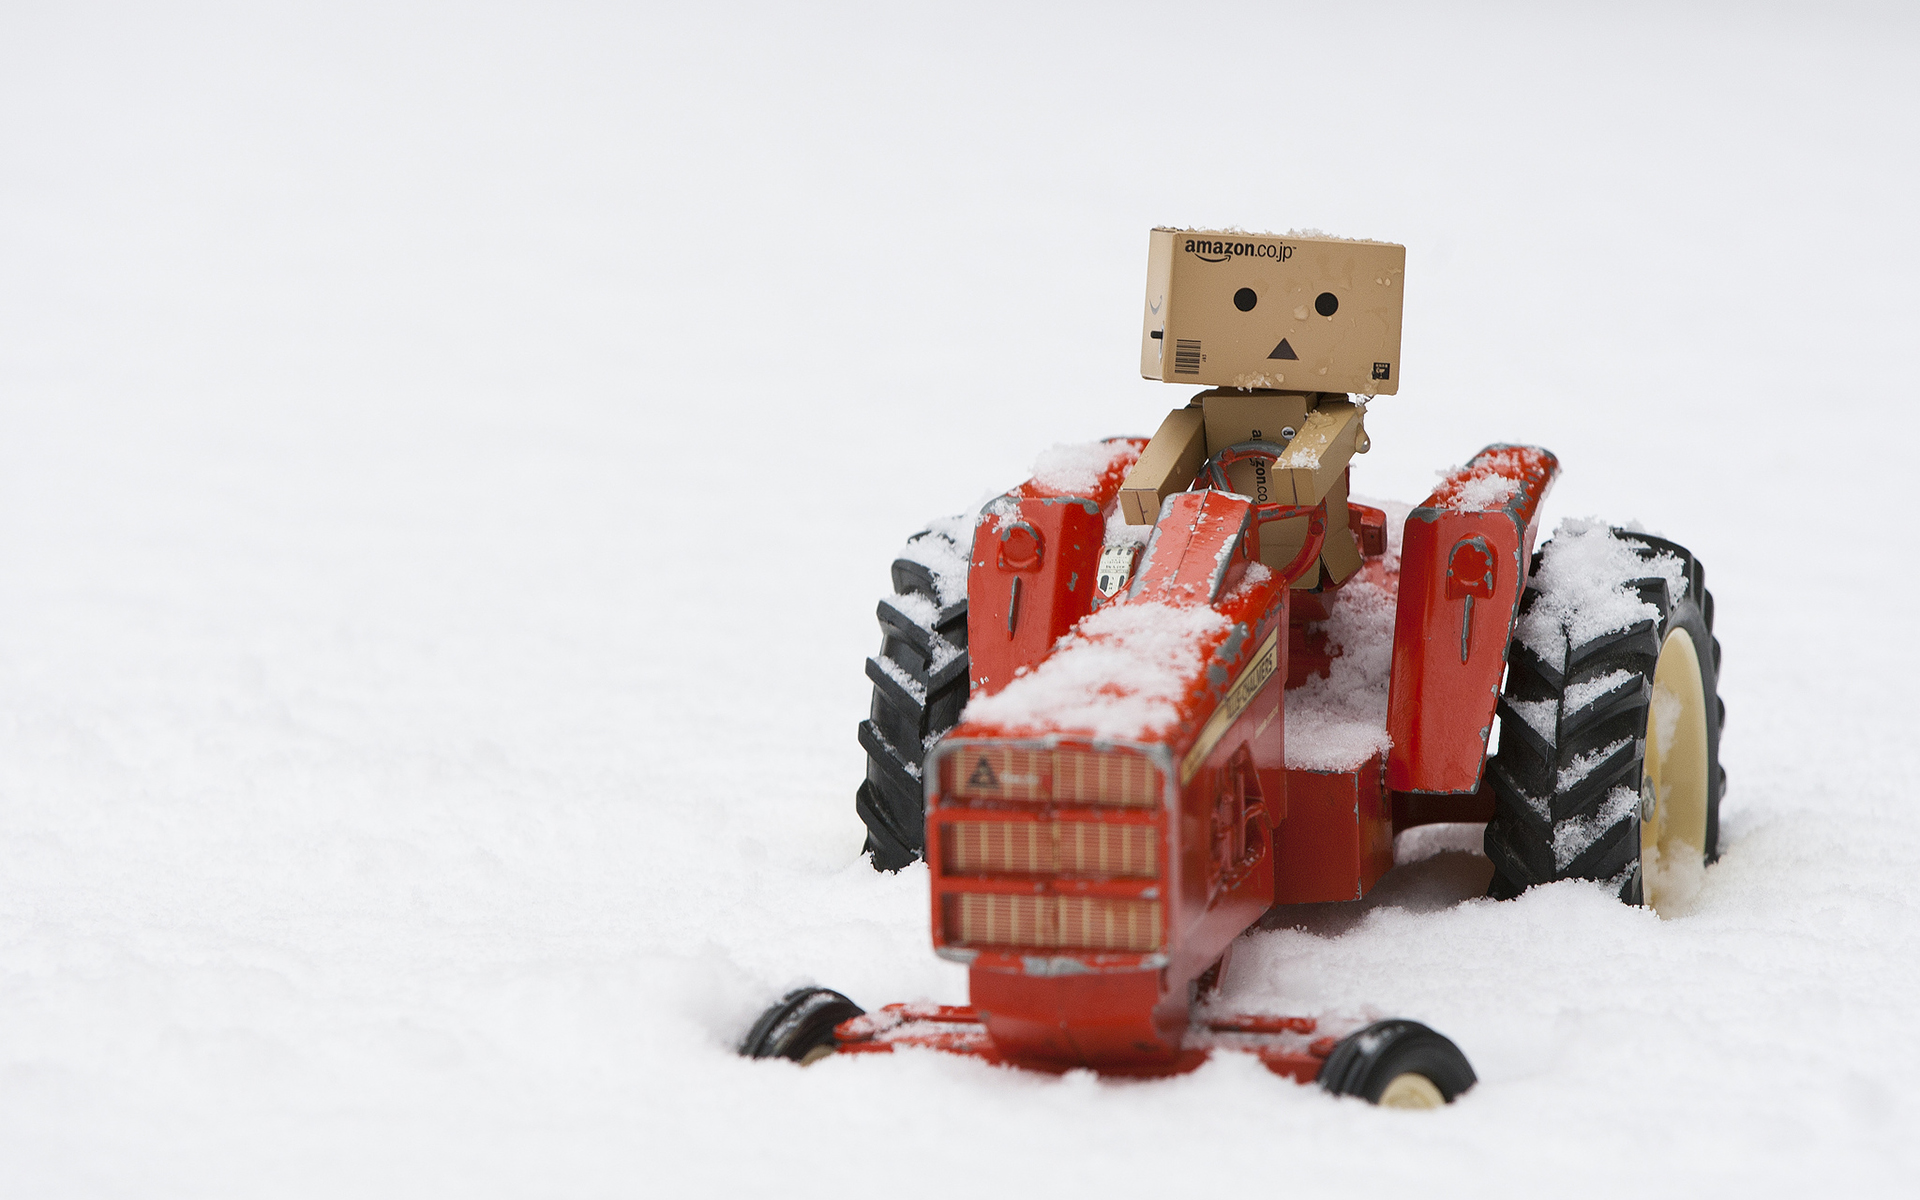 danbo, Tractor, Miniature, Snow, Winter, Humor, Amazon Wallpaper